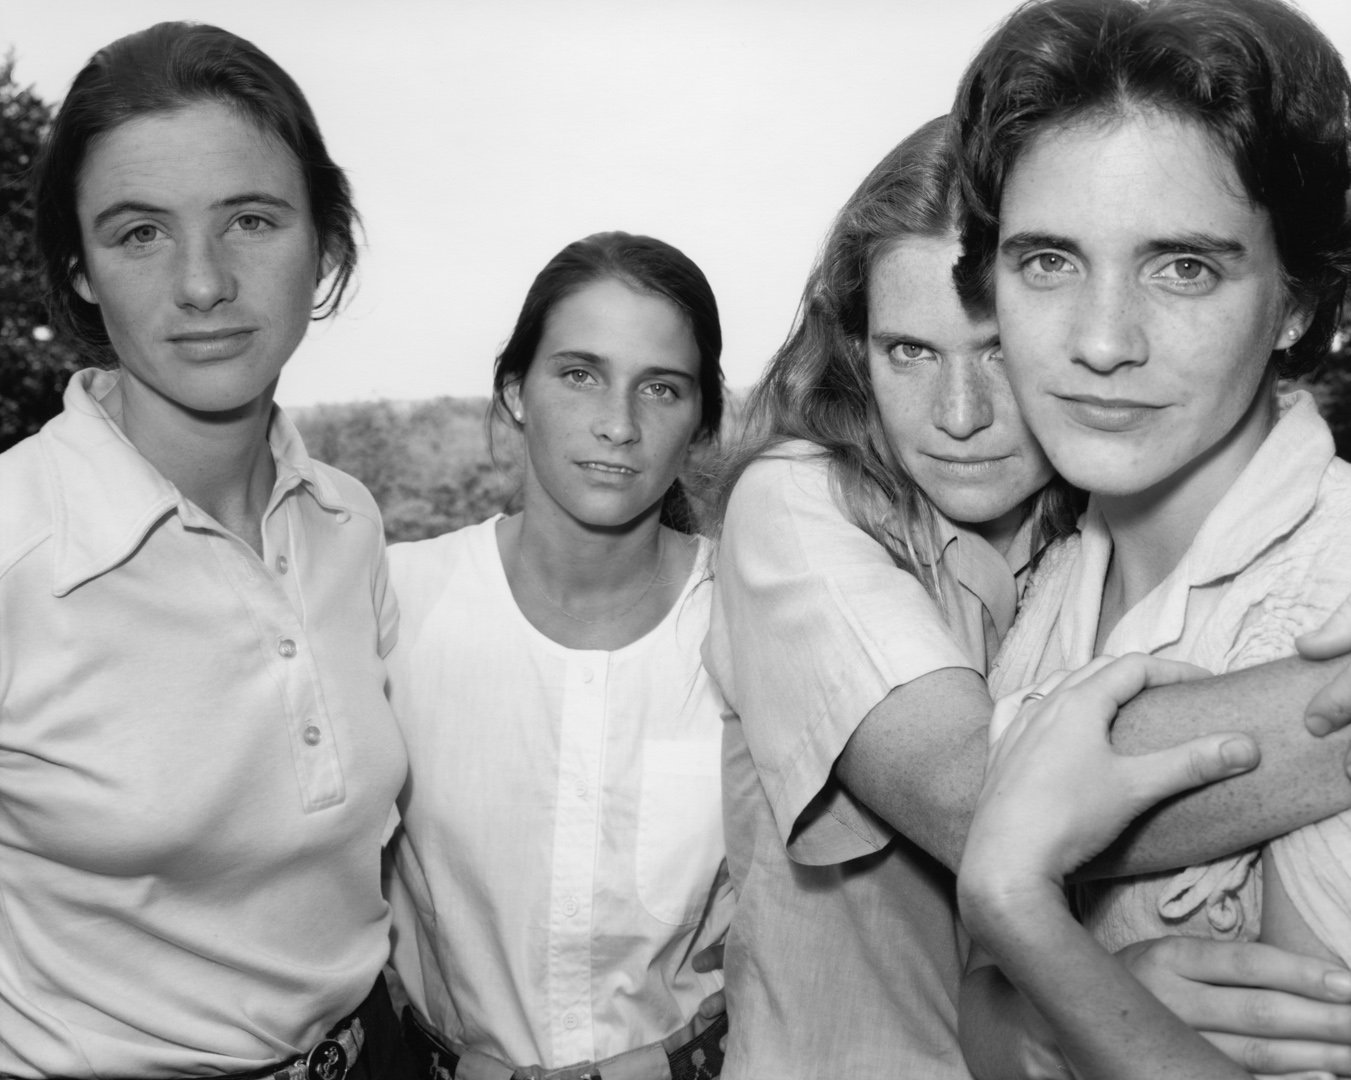 Nicholas Nixon, The Brown Sisters, Greenwich, Rhode Island, 1980